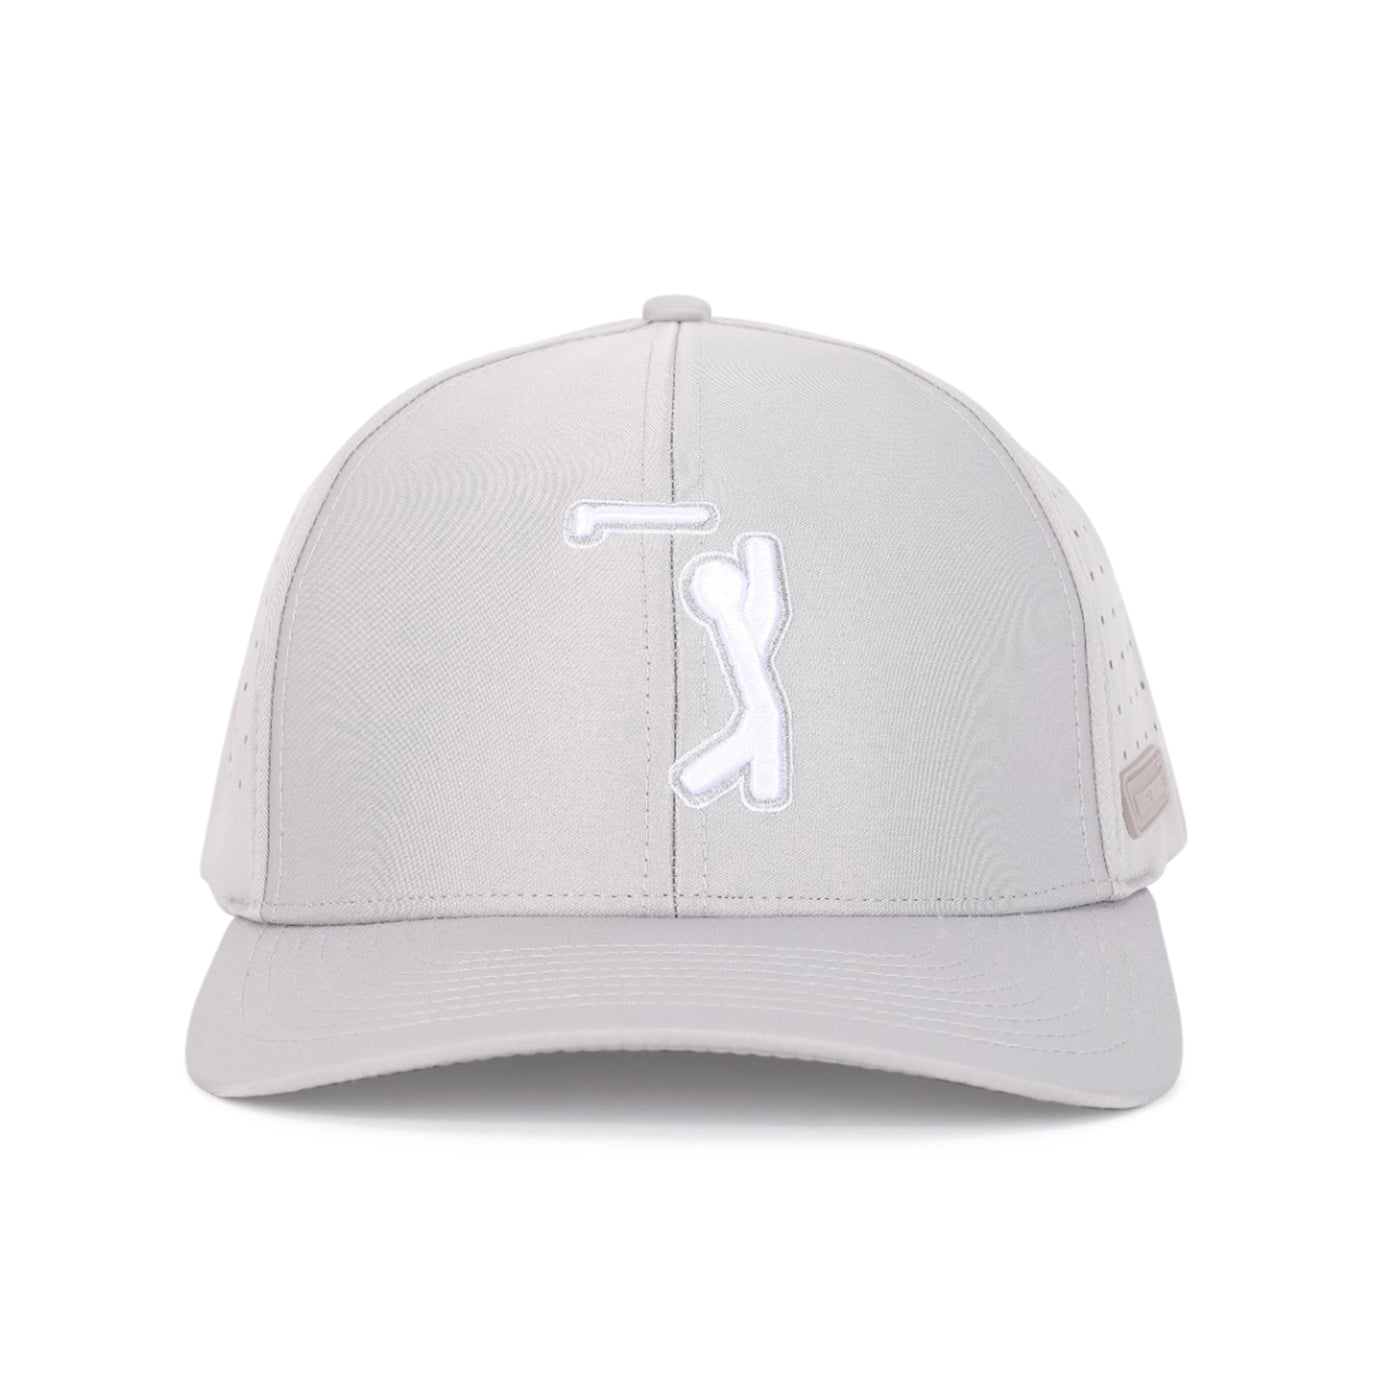 Bogeyman Light Grey - Performance Golf Hat - Fitted